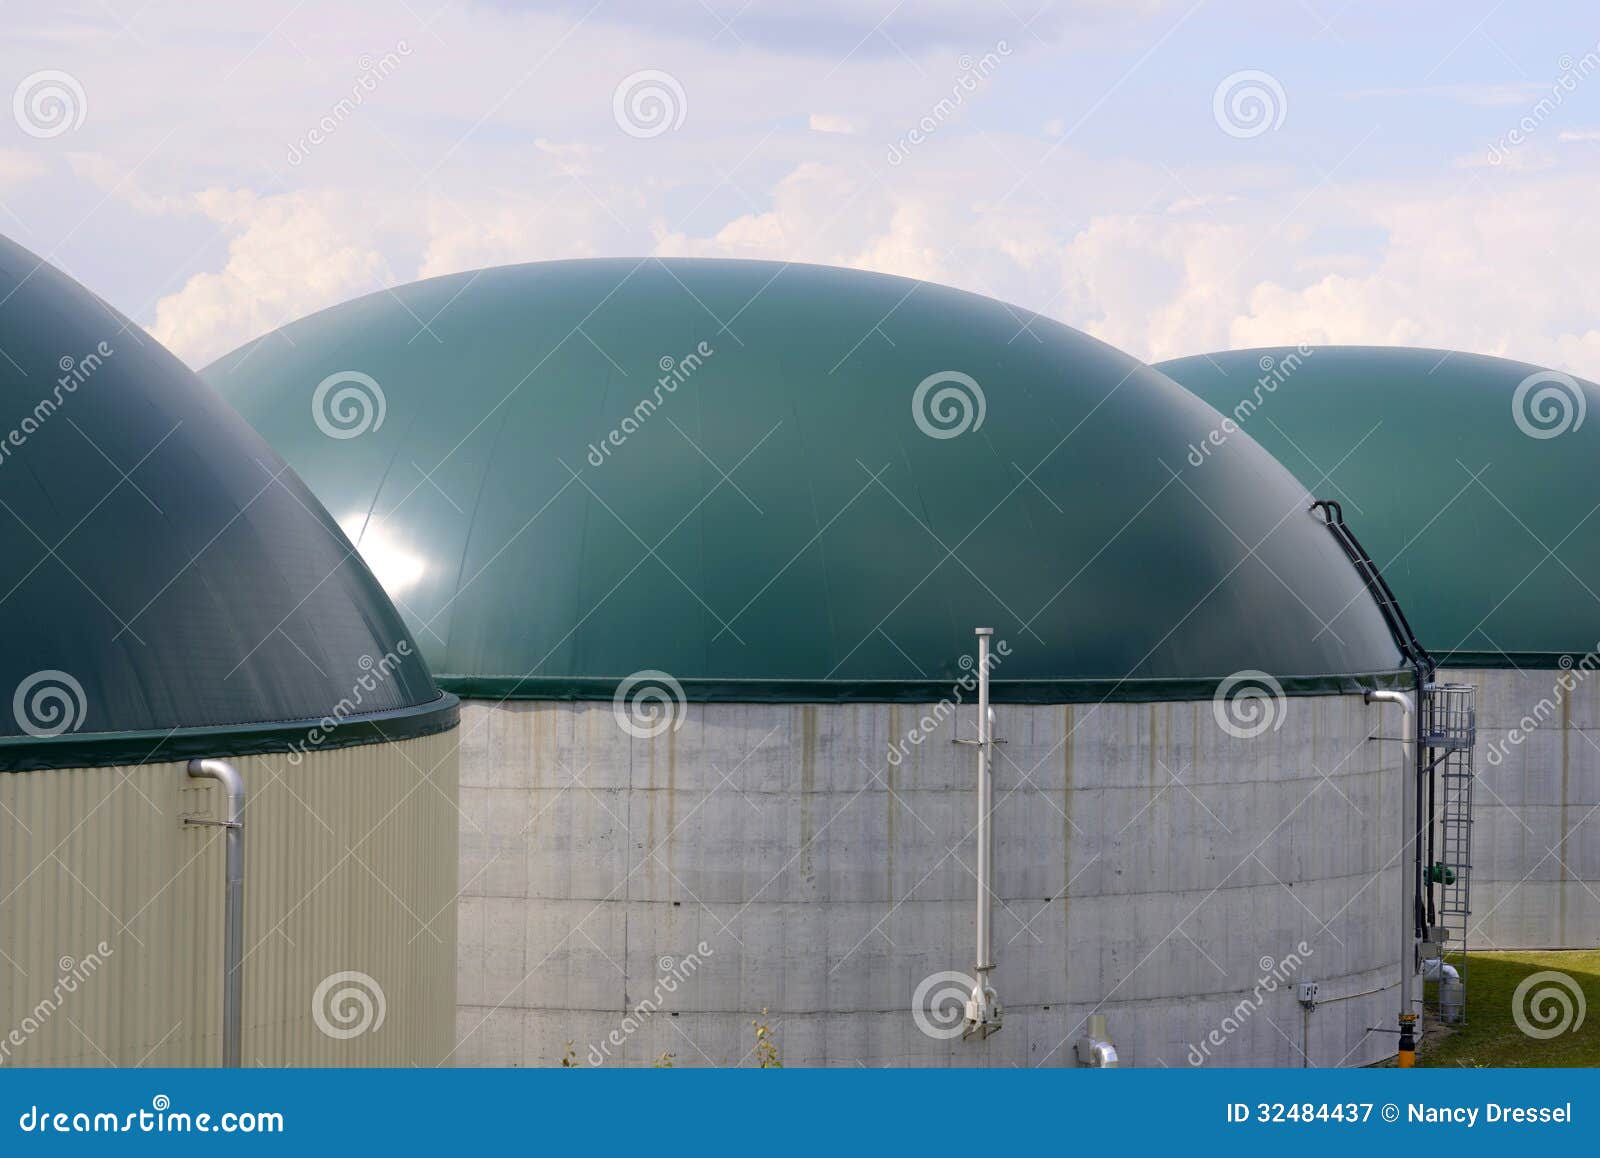 new, modern biogas plants